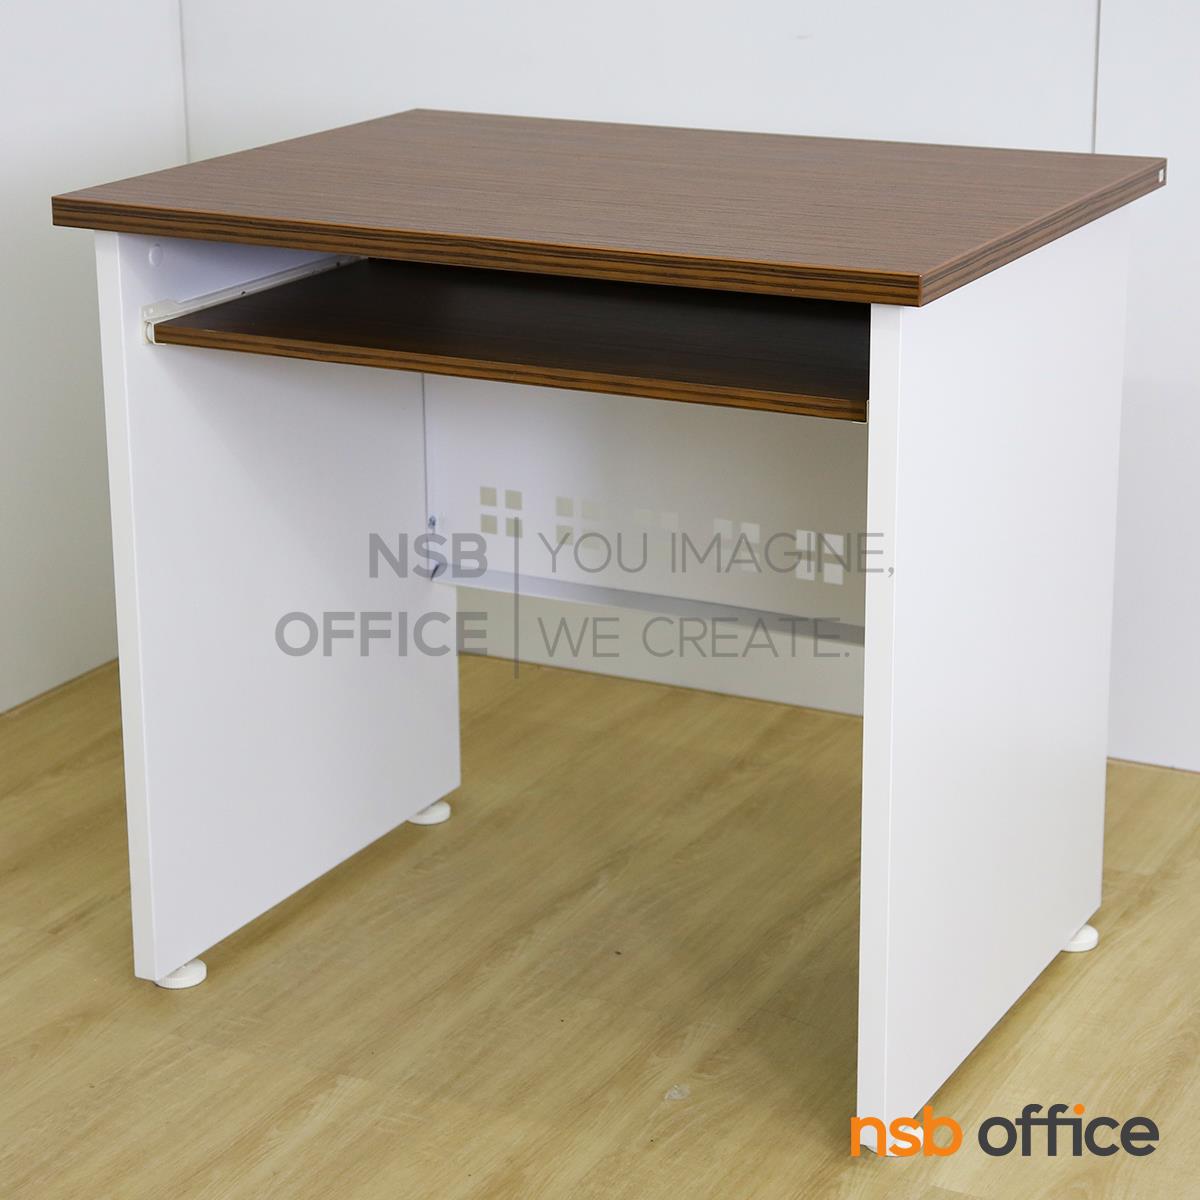 A34A026:โต๊ะคอมพิวเตอร์  รุ่น Luxyl (ลูซิล) ขนาด 80W cm. พร้อมรางคีบอร์ด บังโป๊เหล็ก สีซีบราโน่-ขาว